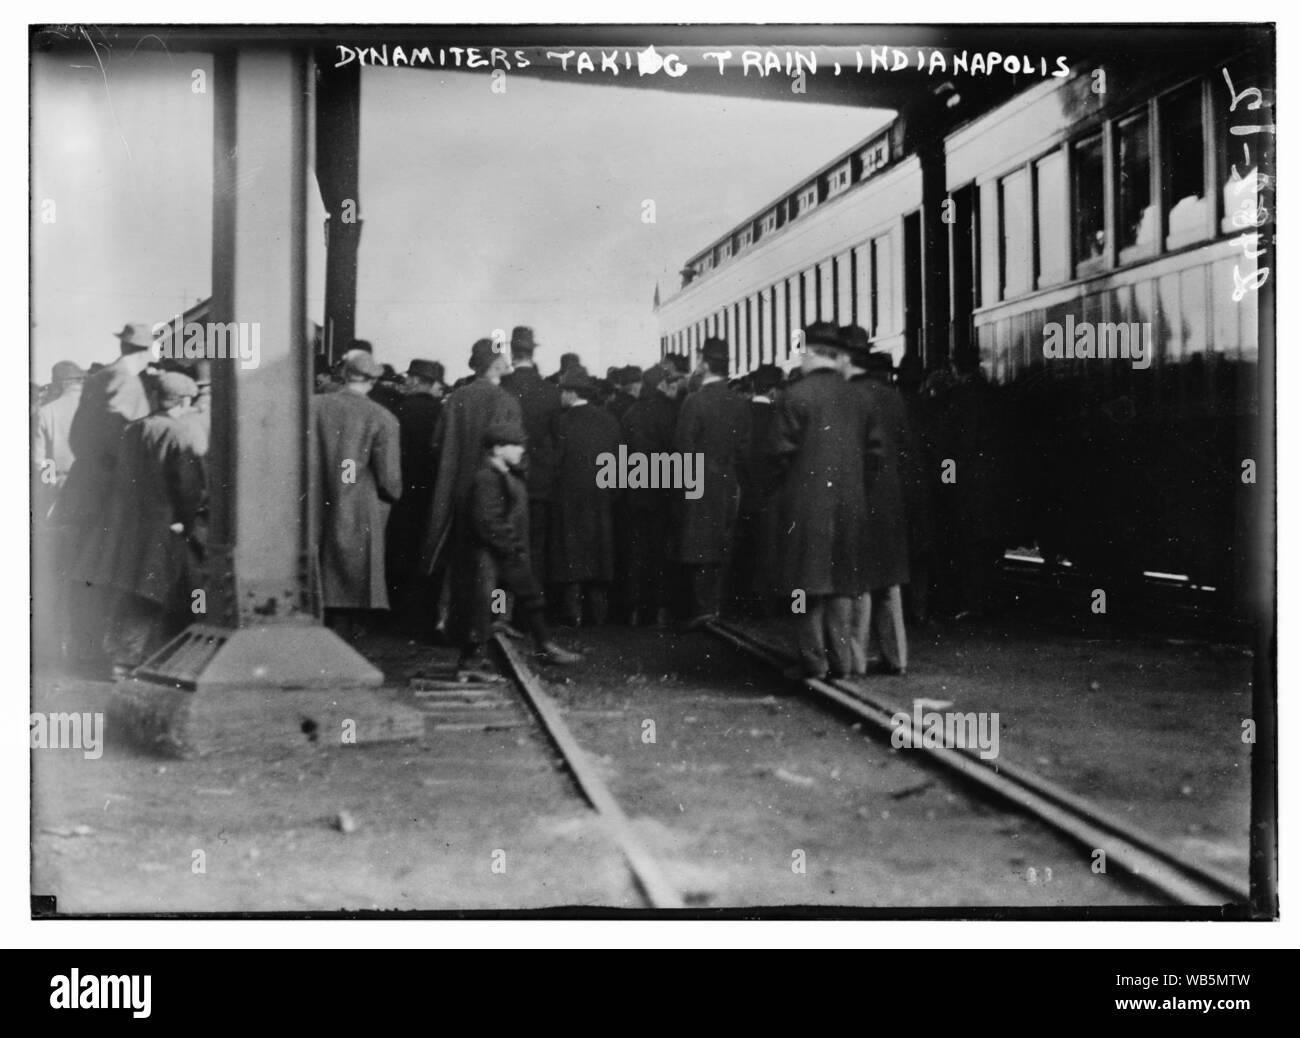 Dynamiters taking train, Indianapolis Stock Photo